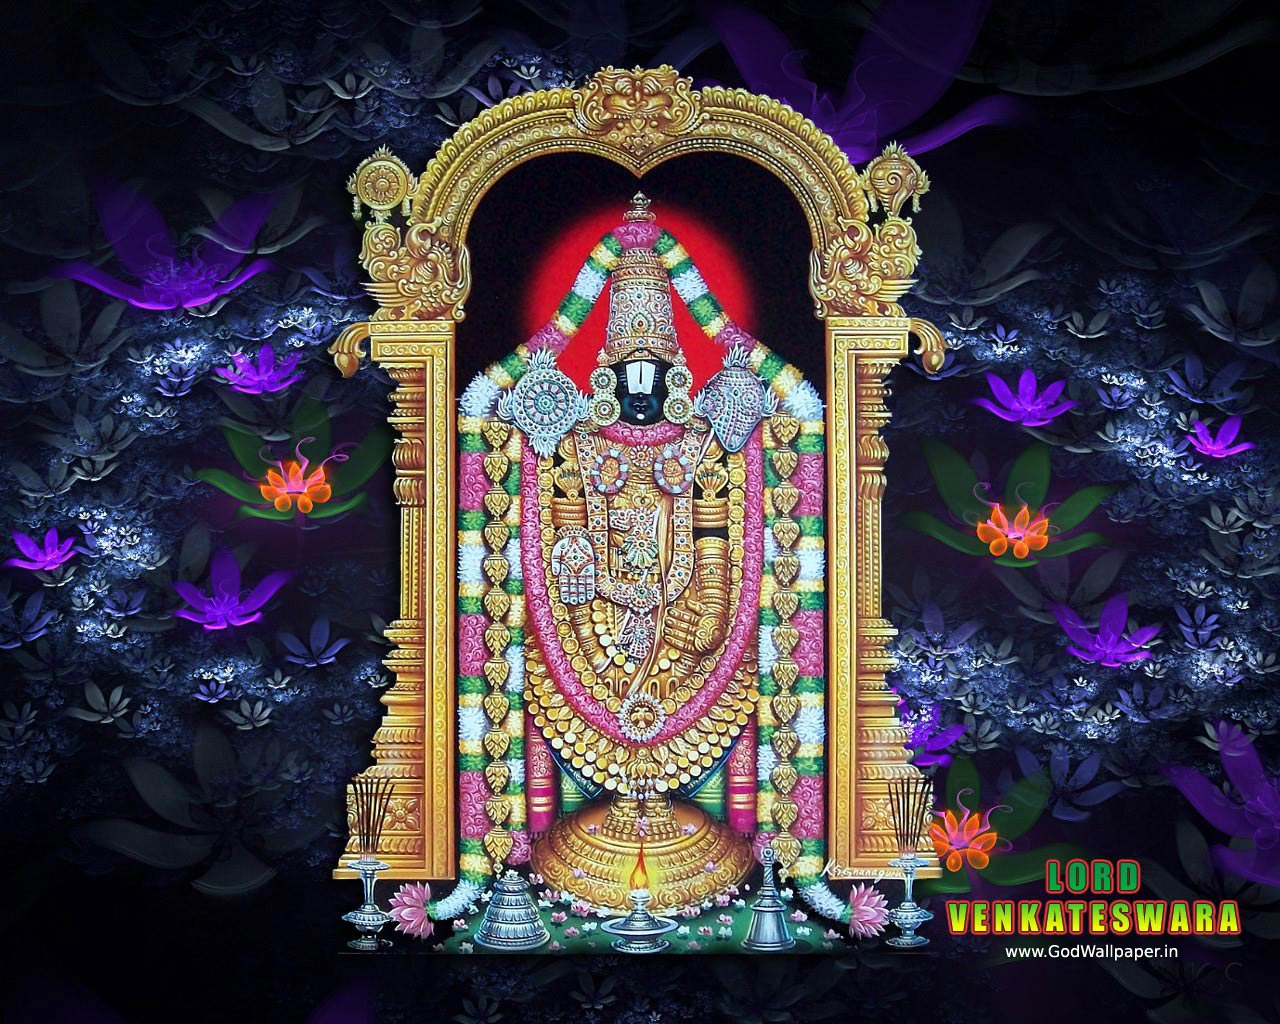 dios venkateswara fondos de pantalla hd,púrpura,fuente,arte,santuario,templo hindú